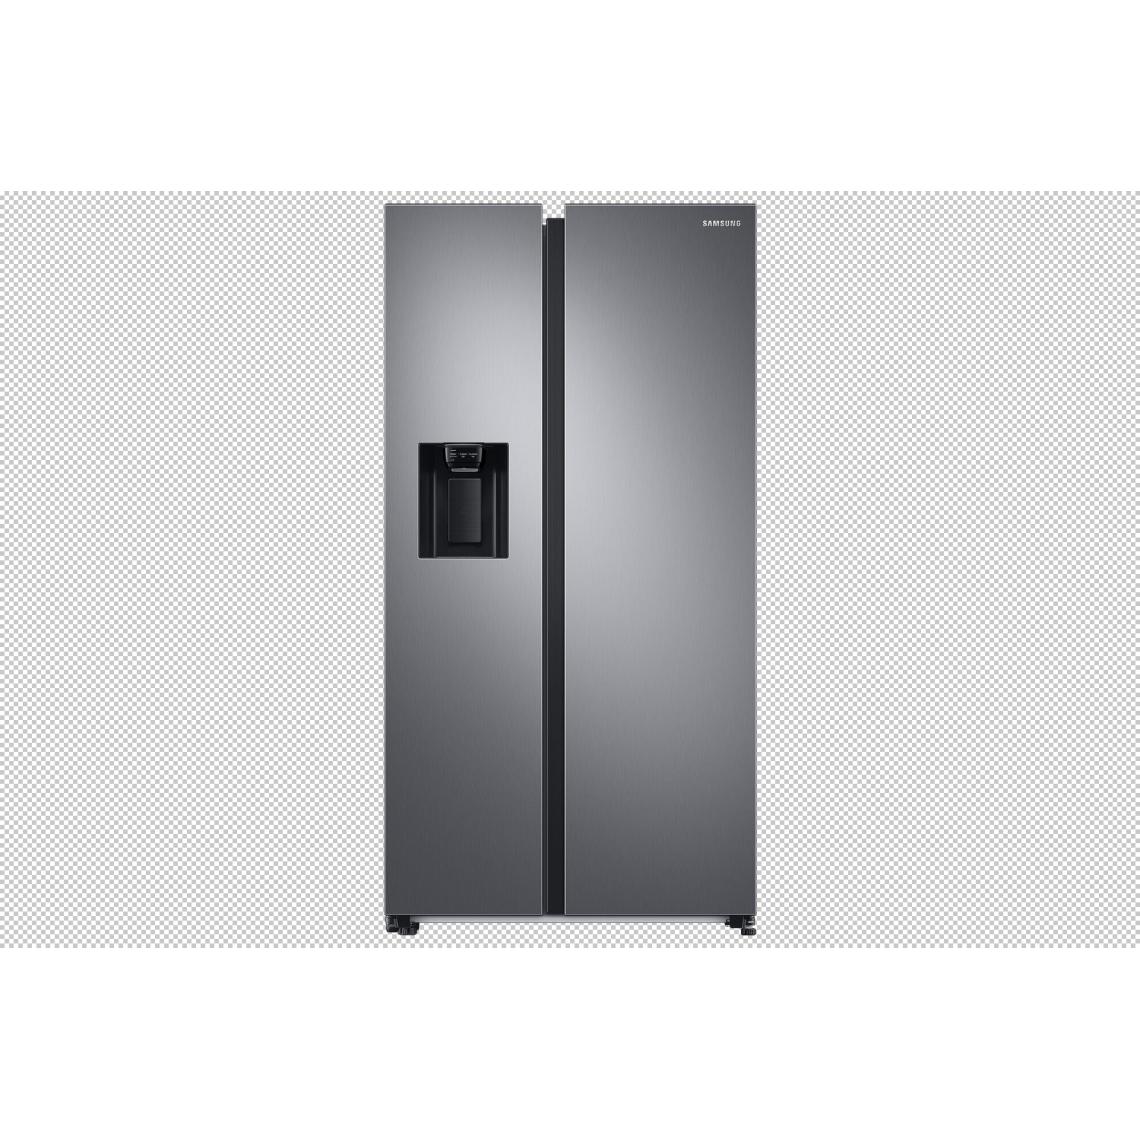 Samsung - Refrigerateur americain Samsung RS68A8830S9 - Réfrigérateur américain